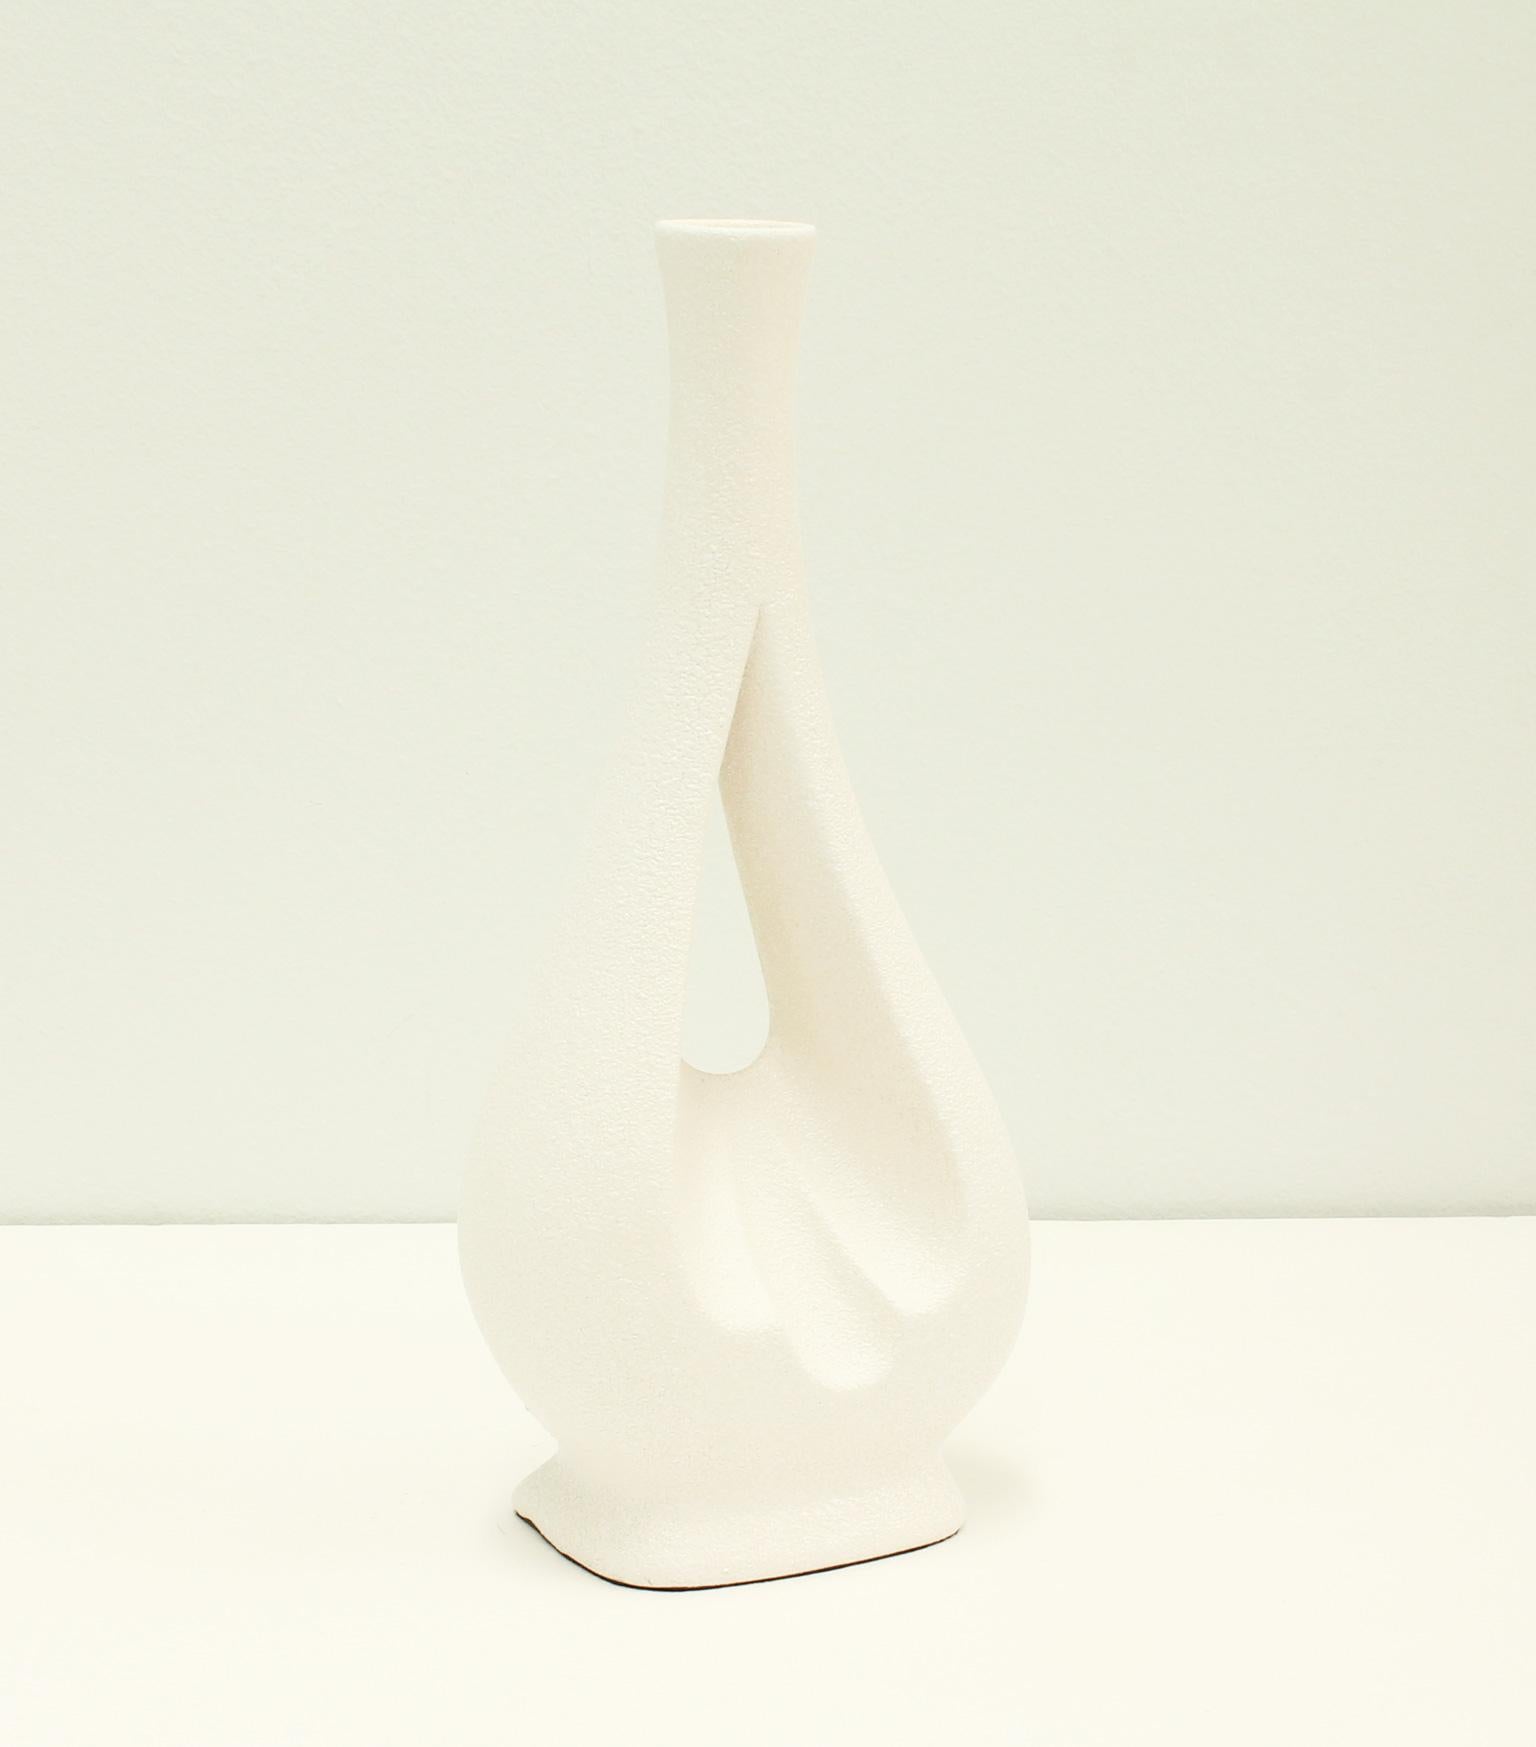 Ceramic vase designed by Roberto Rigon and produced by Bertoncello, Italy, 1970's. Ceramic in matte white grainy glaze.